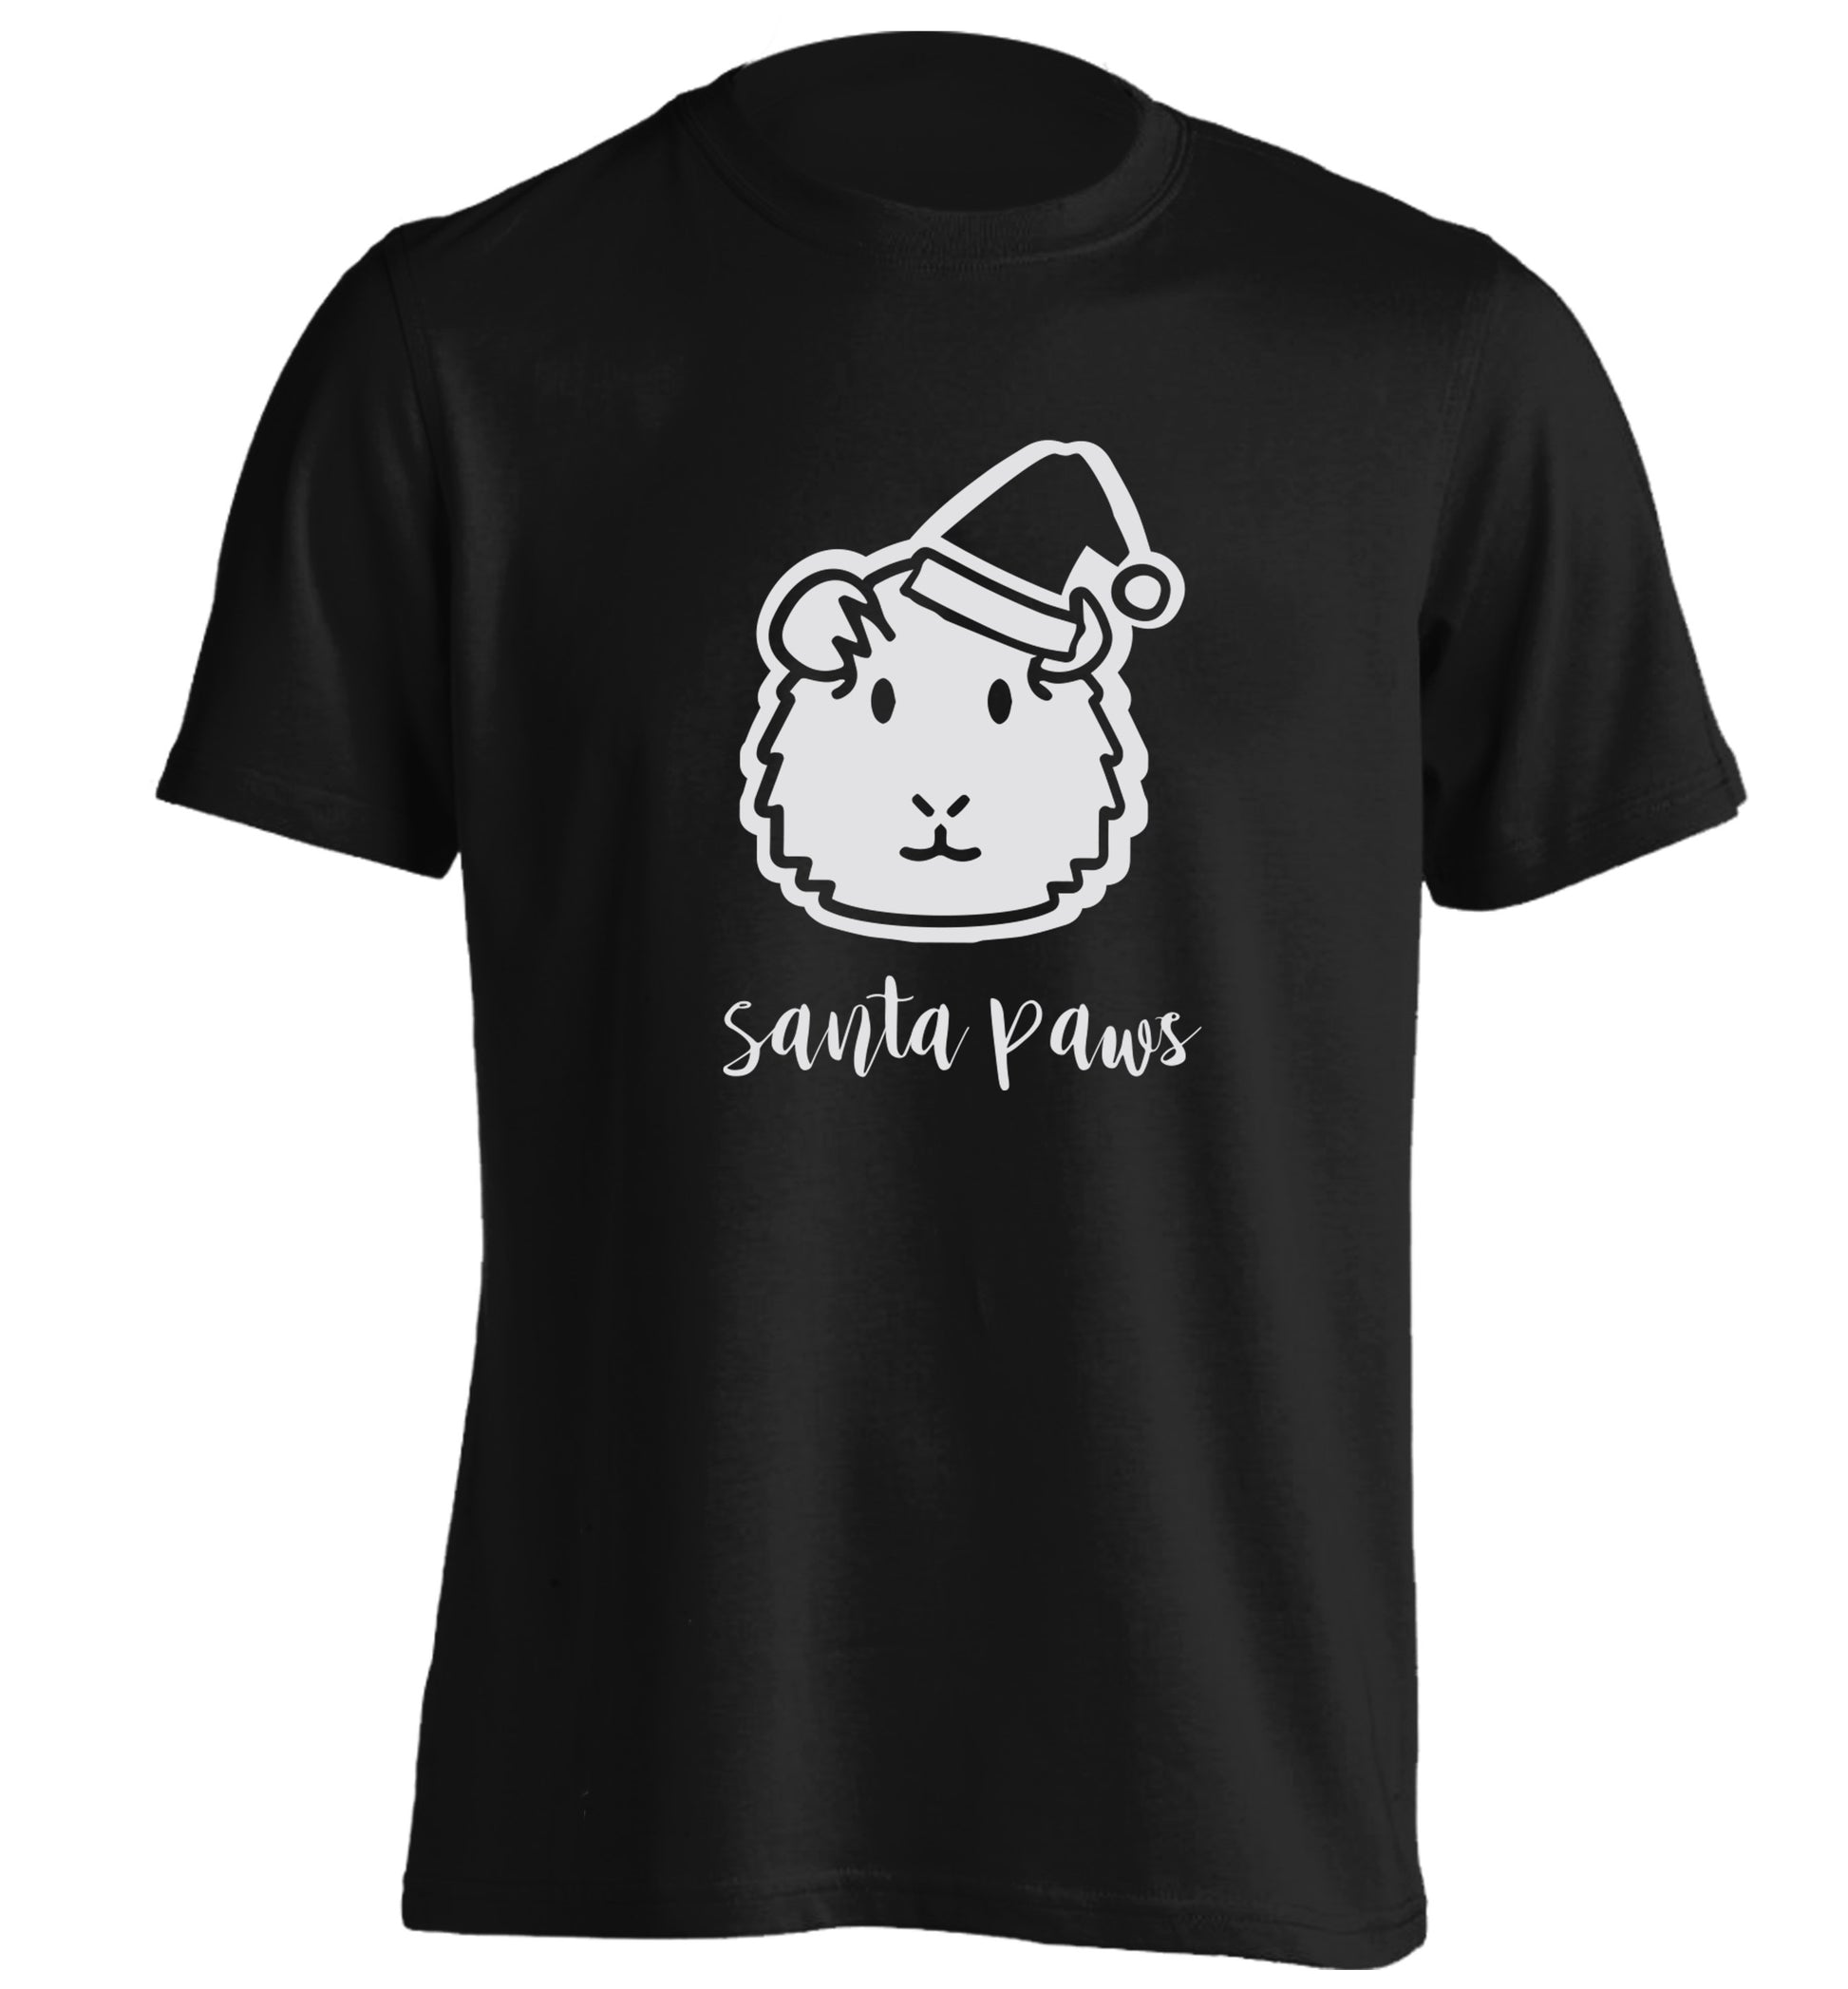 Guinea pig Santa Paws adults unisex black Tshirt 2XL